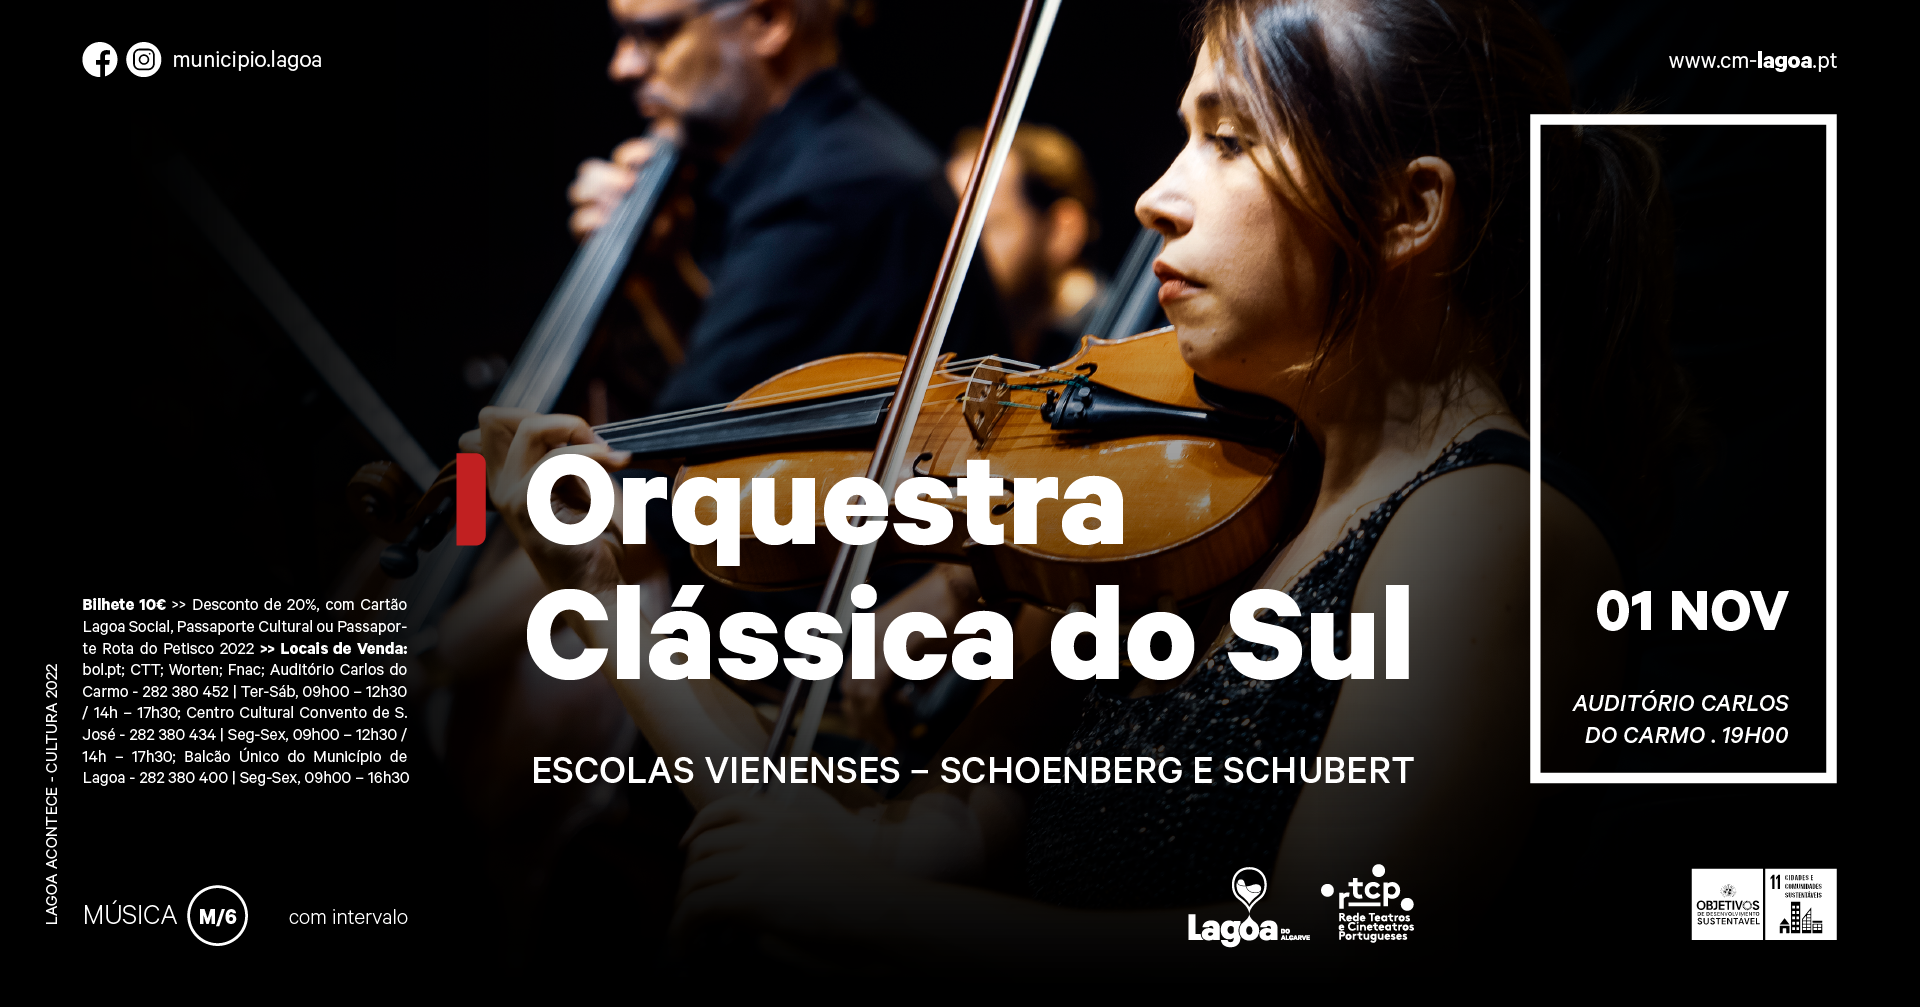 Concerto da Orquestra Clássica do Sul - “ESCOLAS VIENENSES – SCHOENBERG E SCHUBERT”